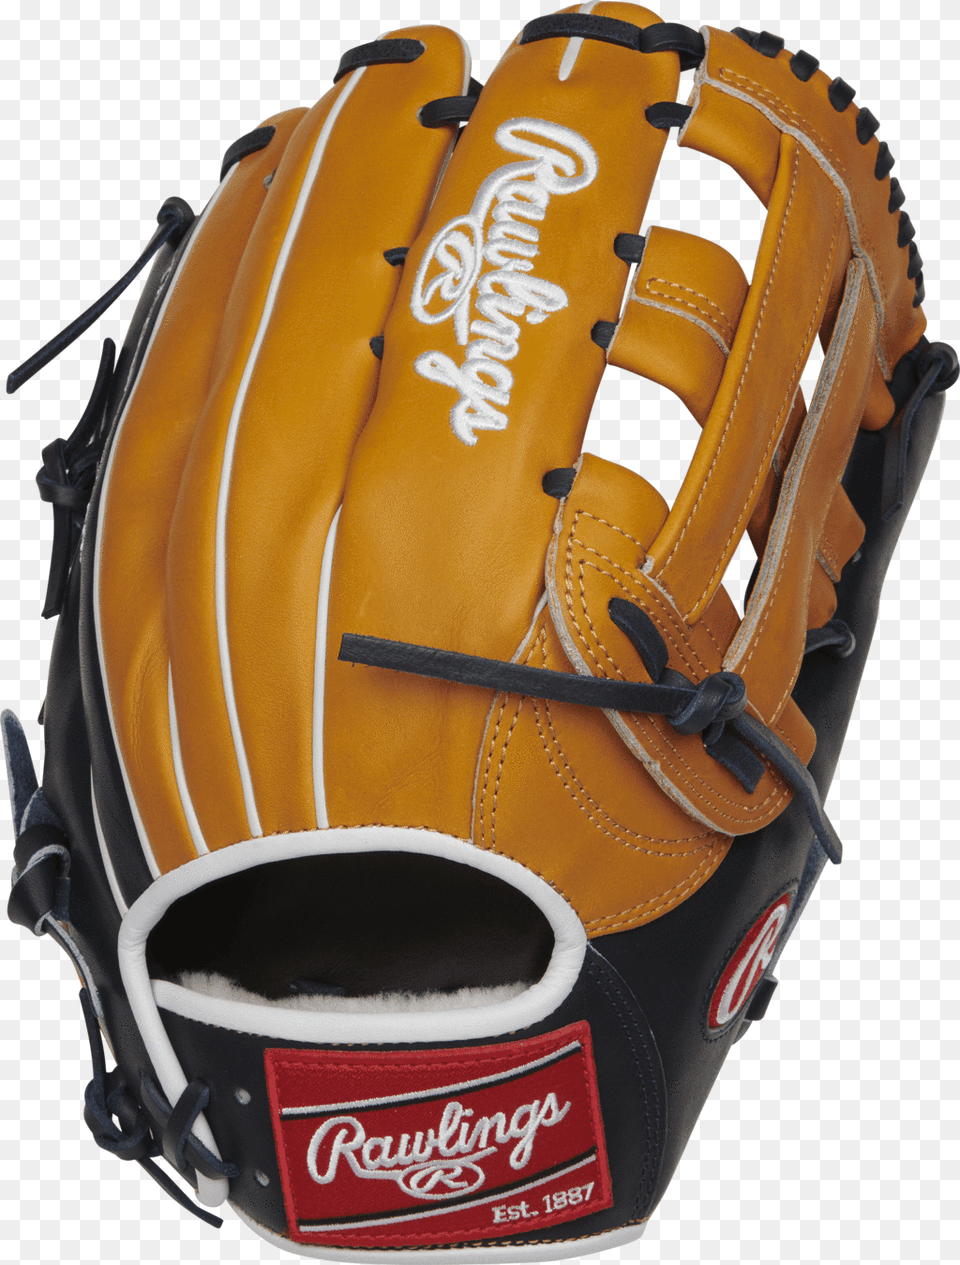 Rawlings Baseball Glove 12 Inch Outfield, Baseball Glove, Clothing, Sport Png